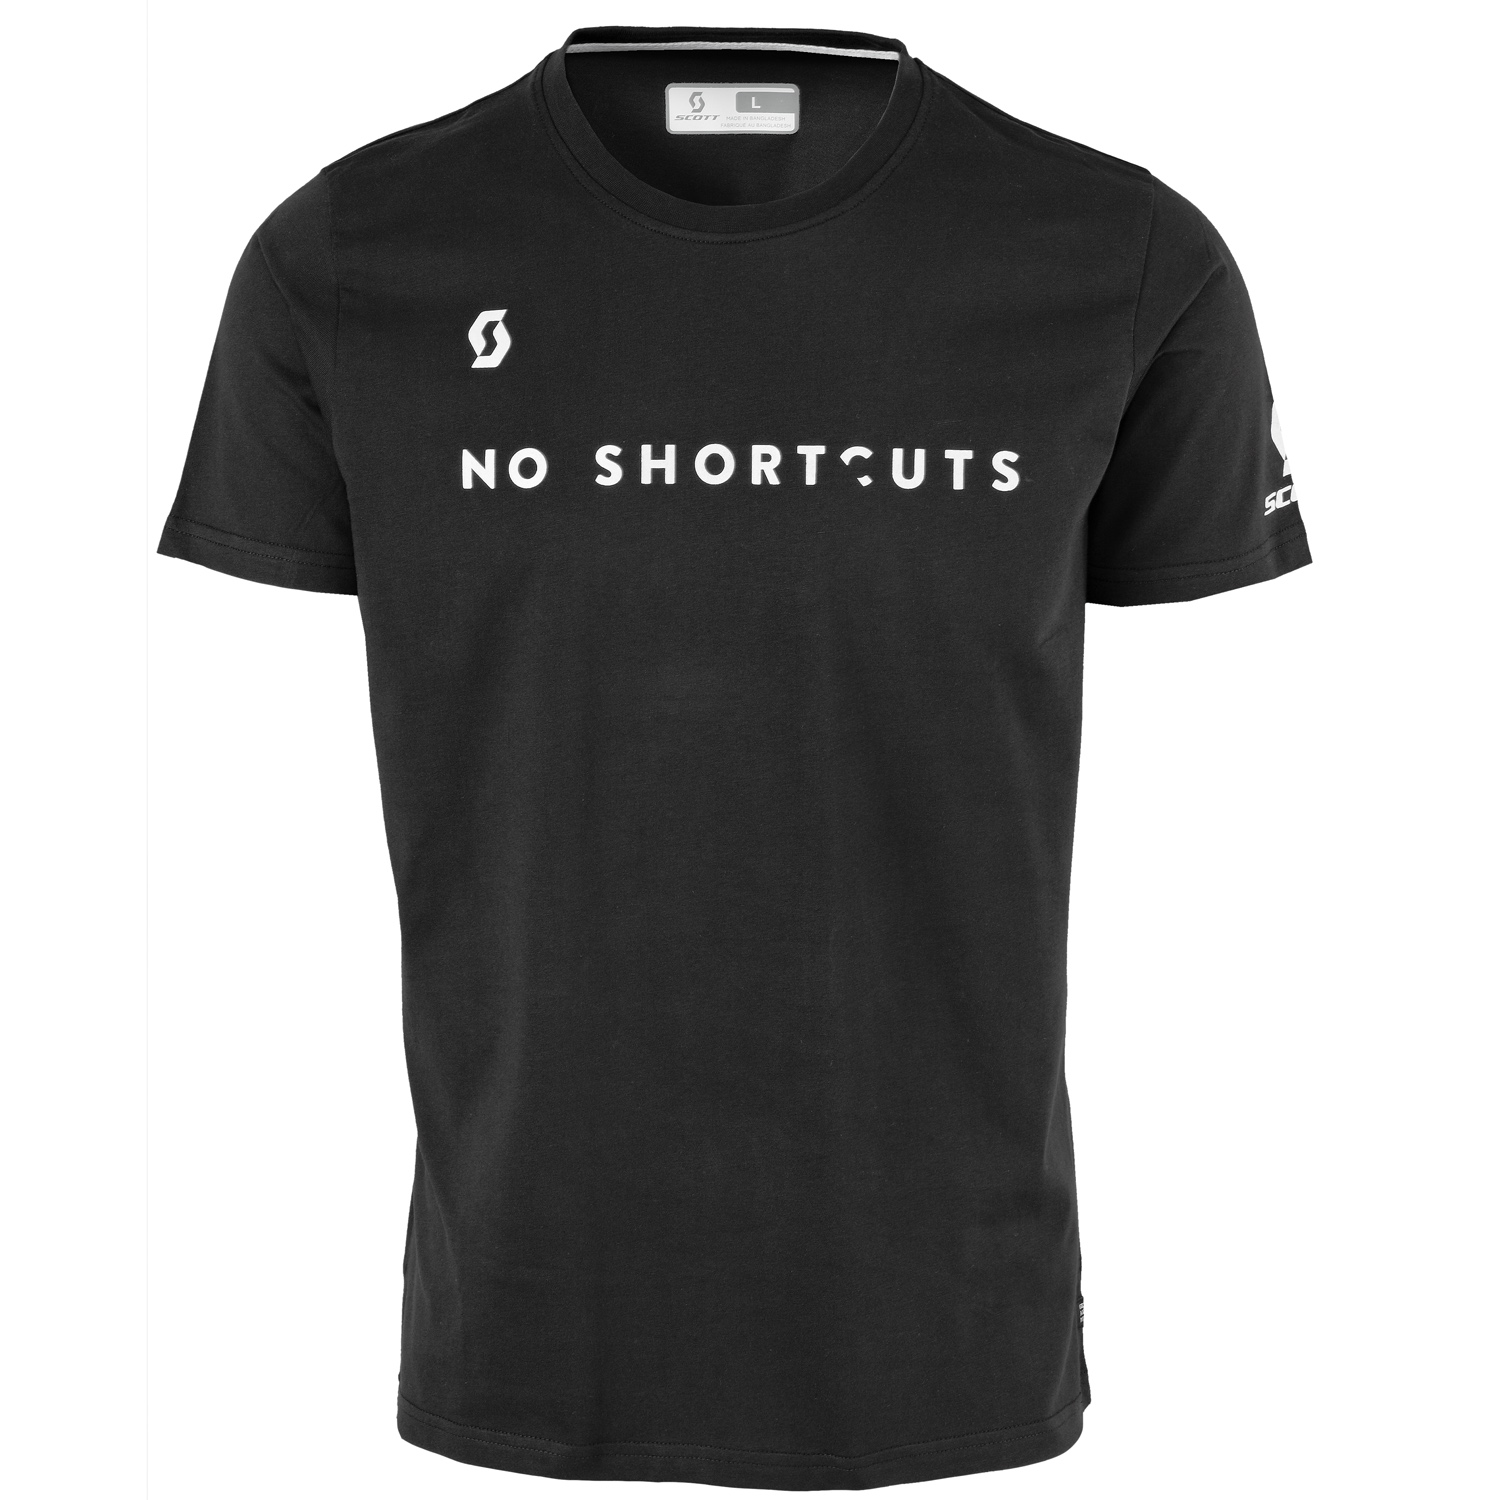 Scott T-Shirt 5 No Shortcuts Schwarz